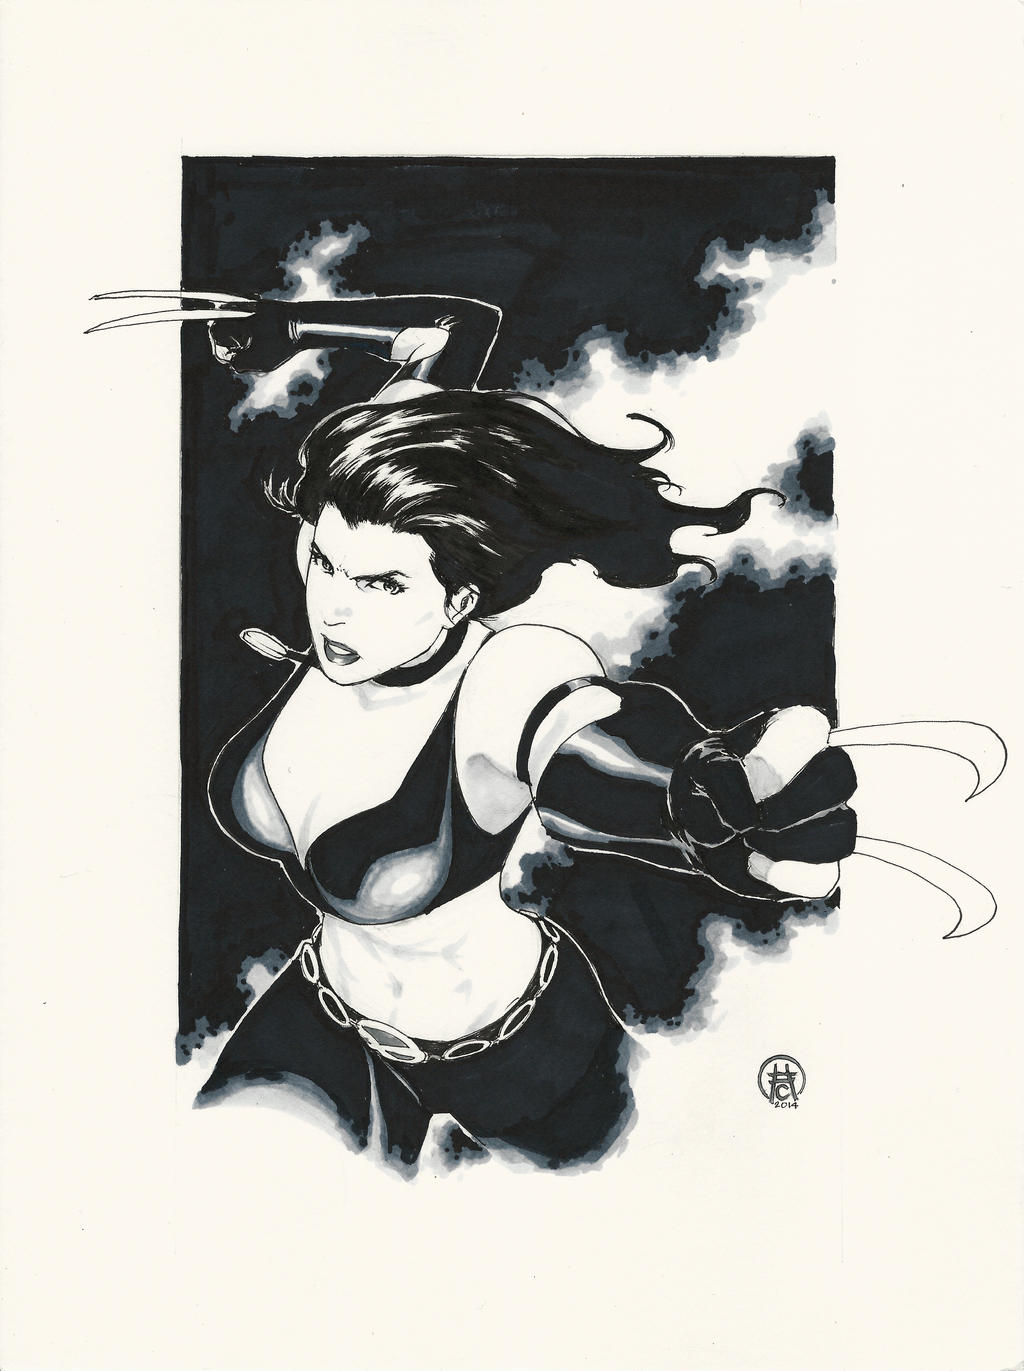 X-23 Commission for Big Wow Comicfest